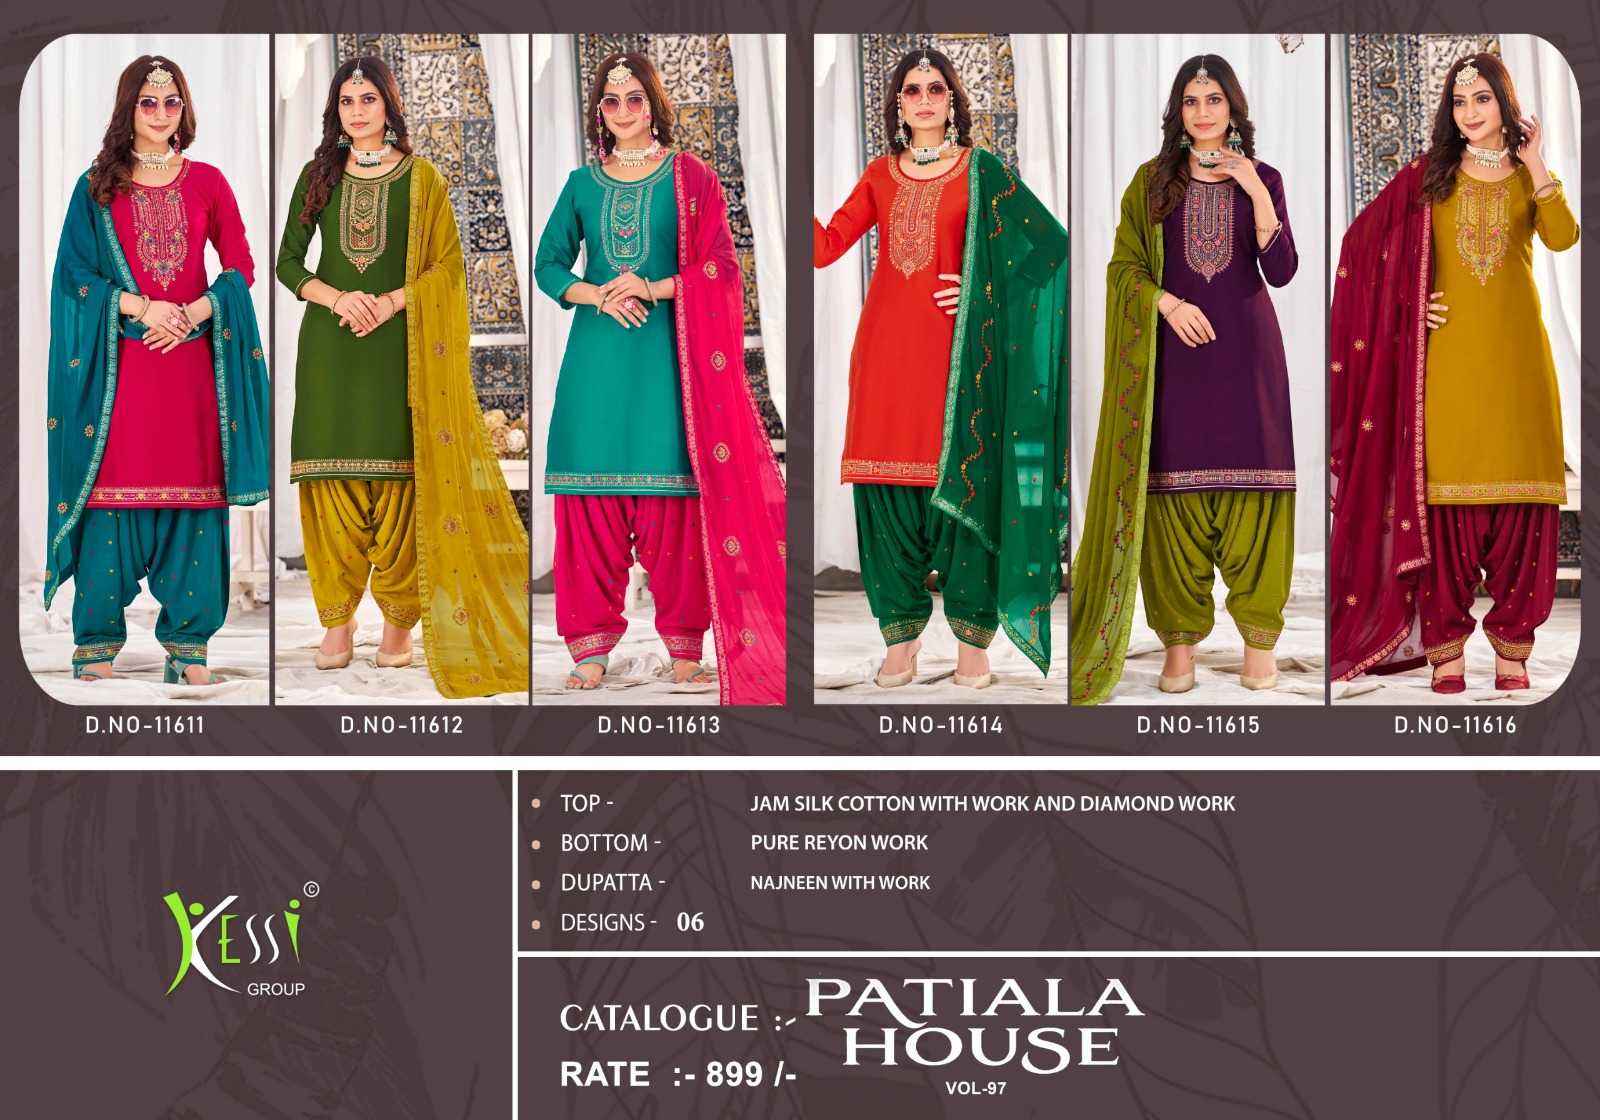 Kessi Patiala House Vol 97 Cotton Dress Material 6 pcs Catalogue